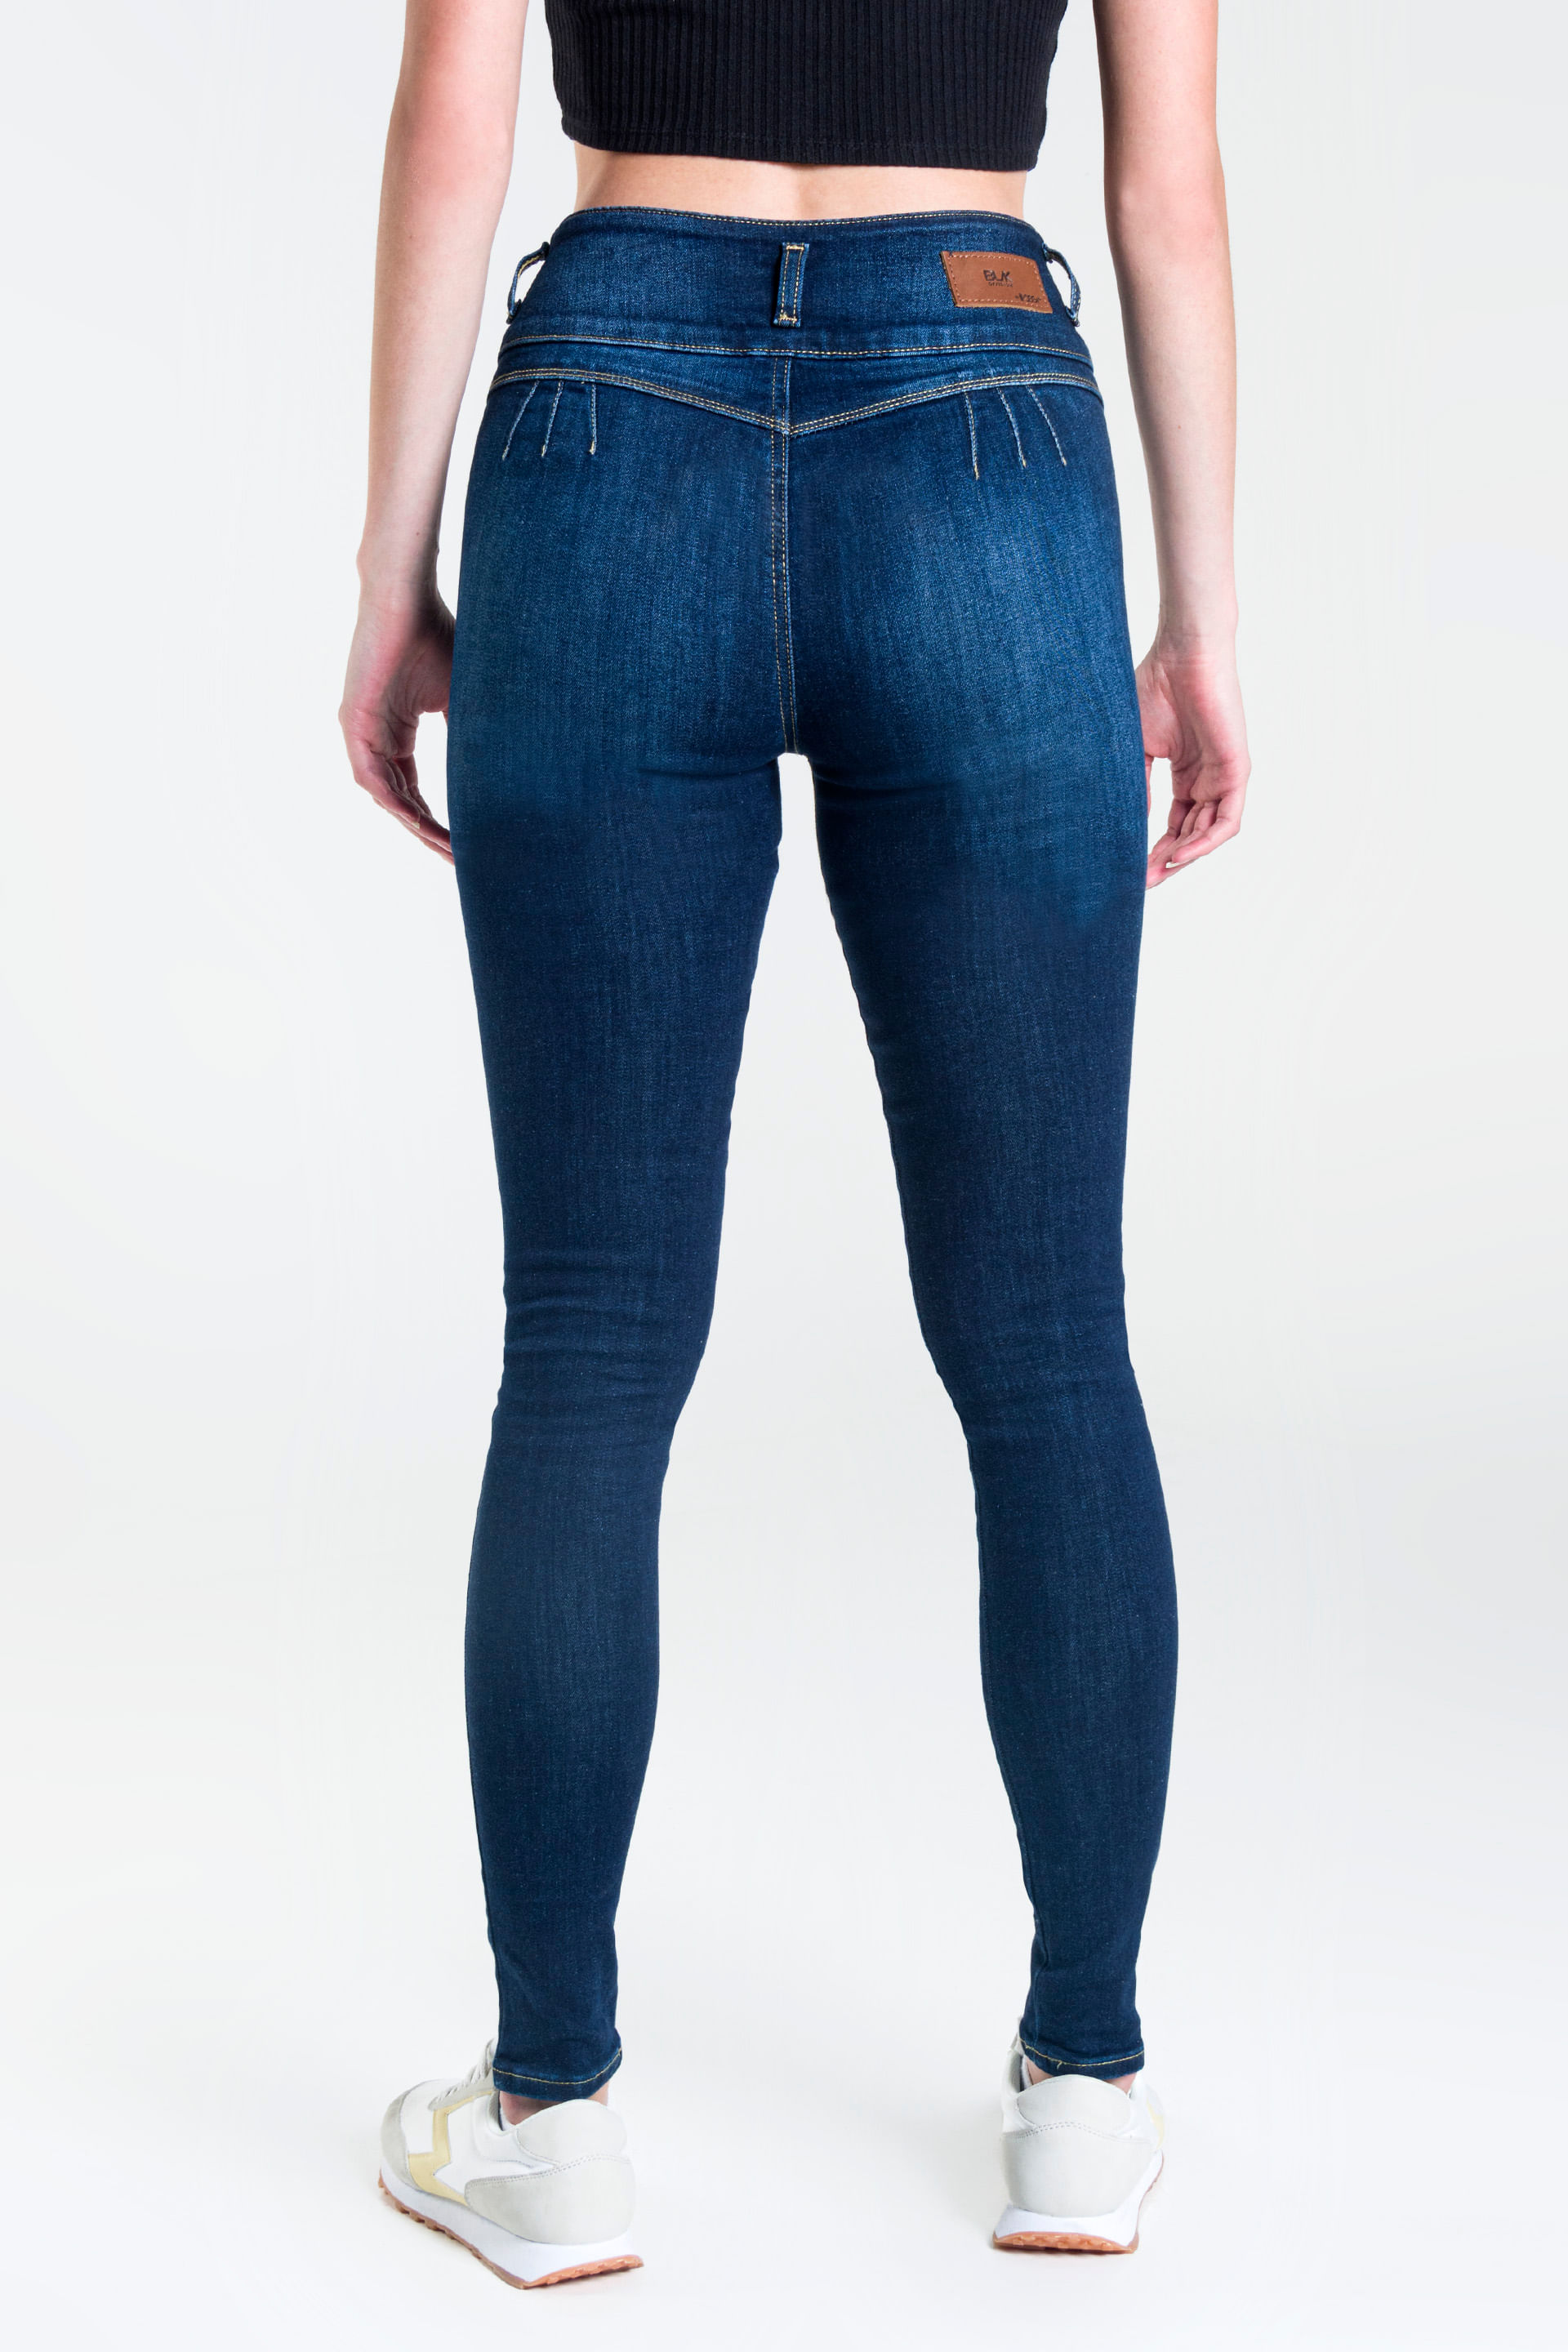 Jeans Súper Skinny Oggi - Katia para Mujer Mezclilla Azul Oscuro 2222105